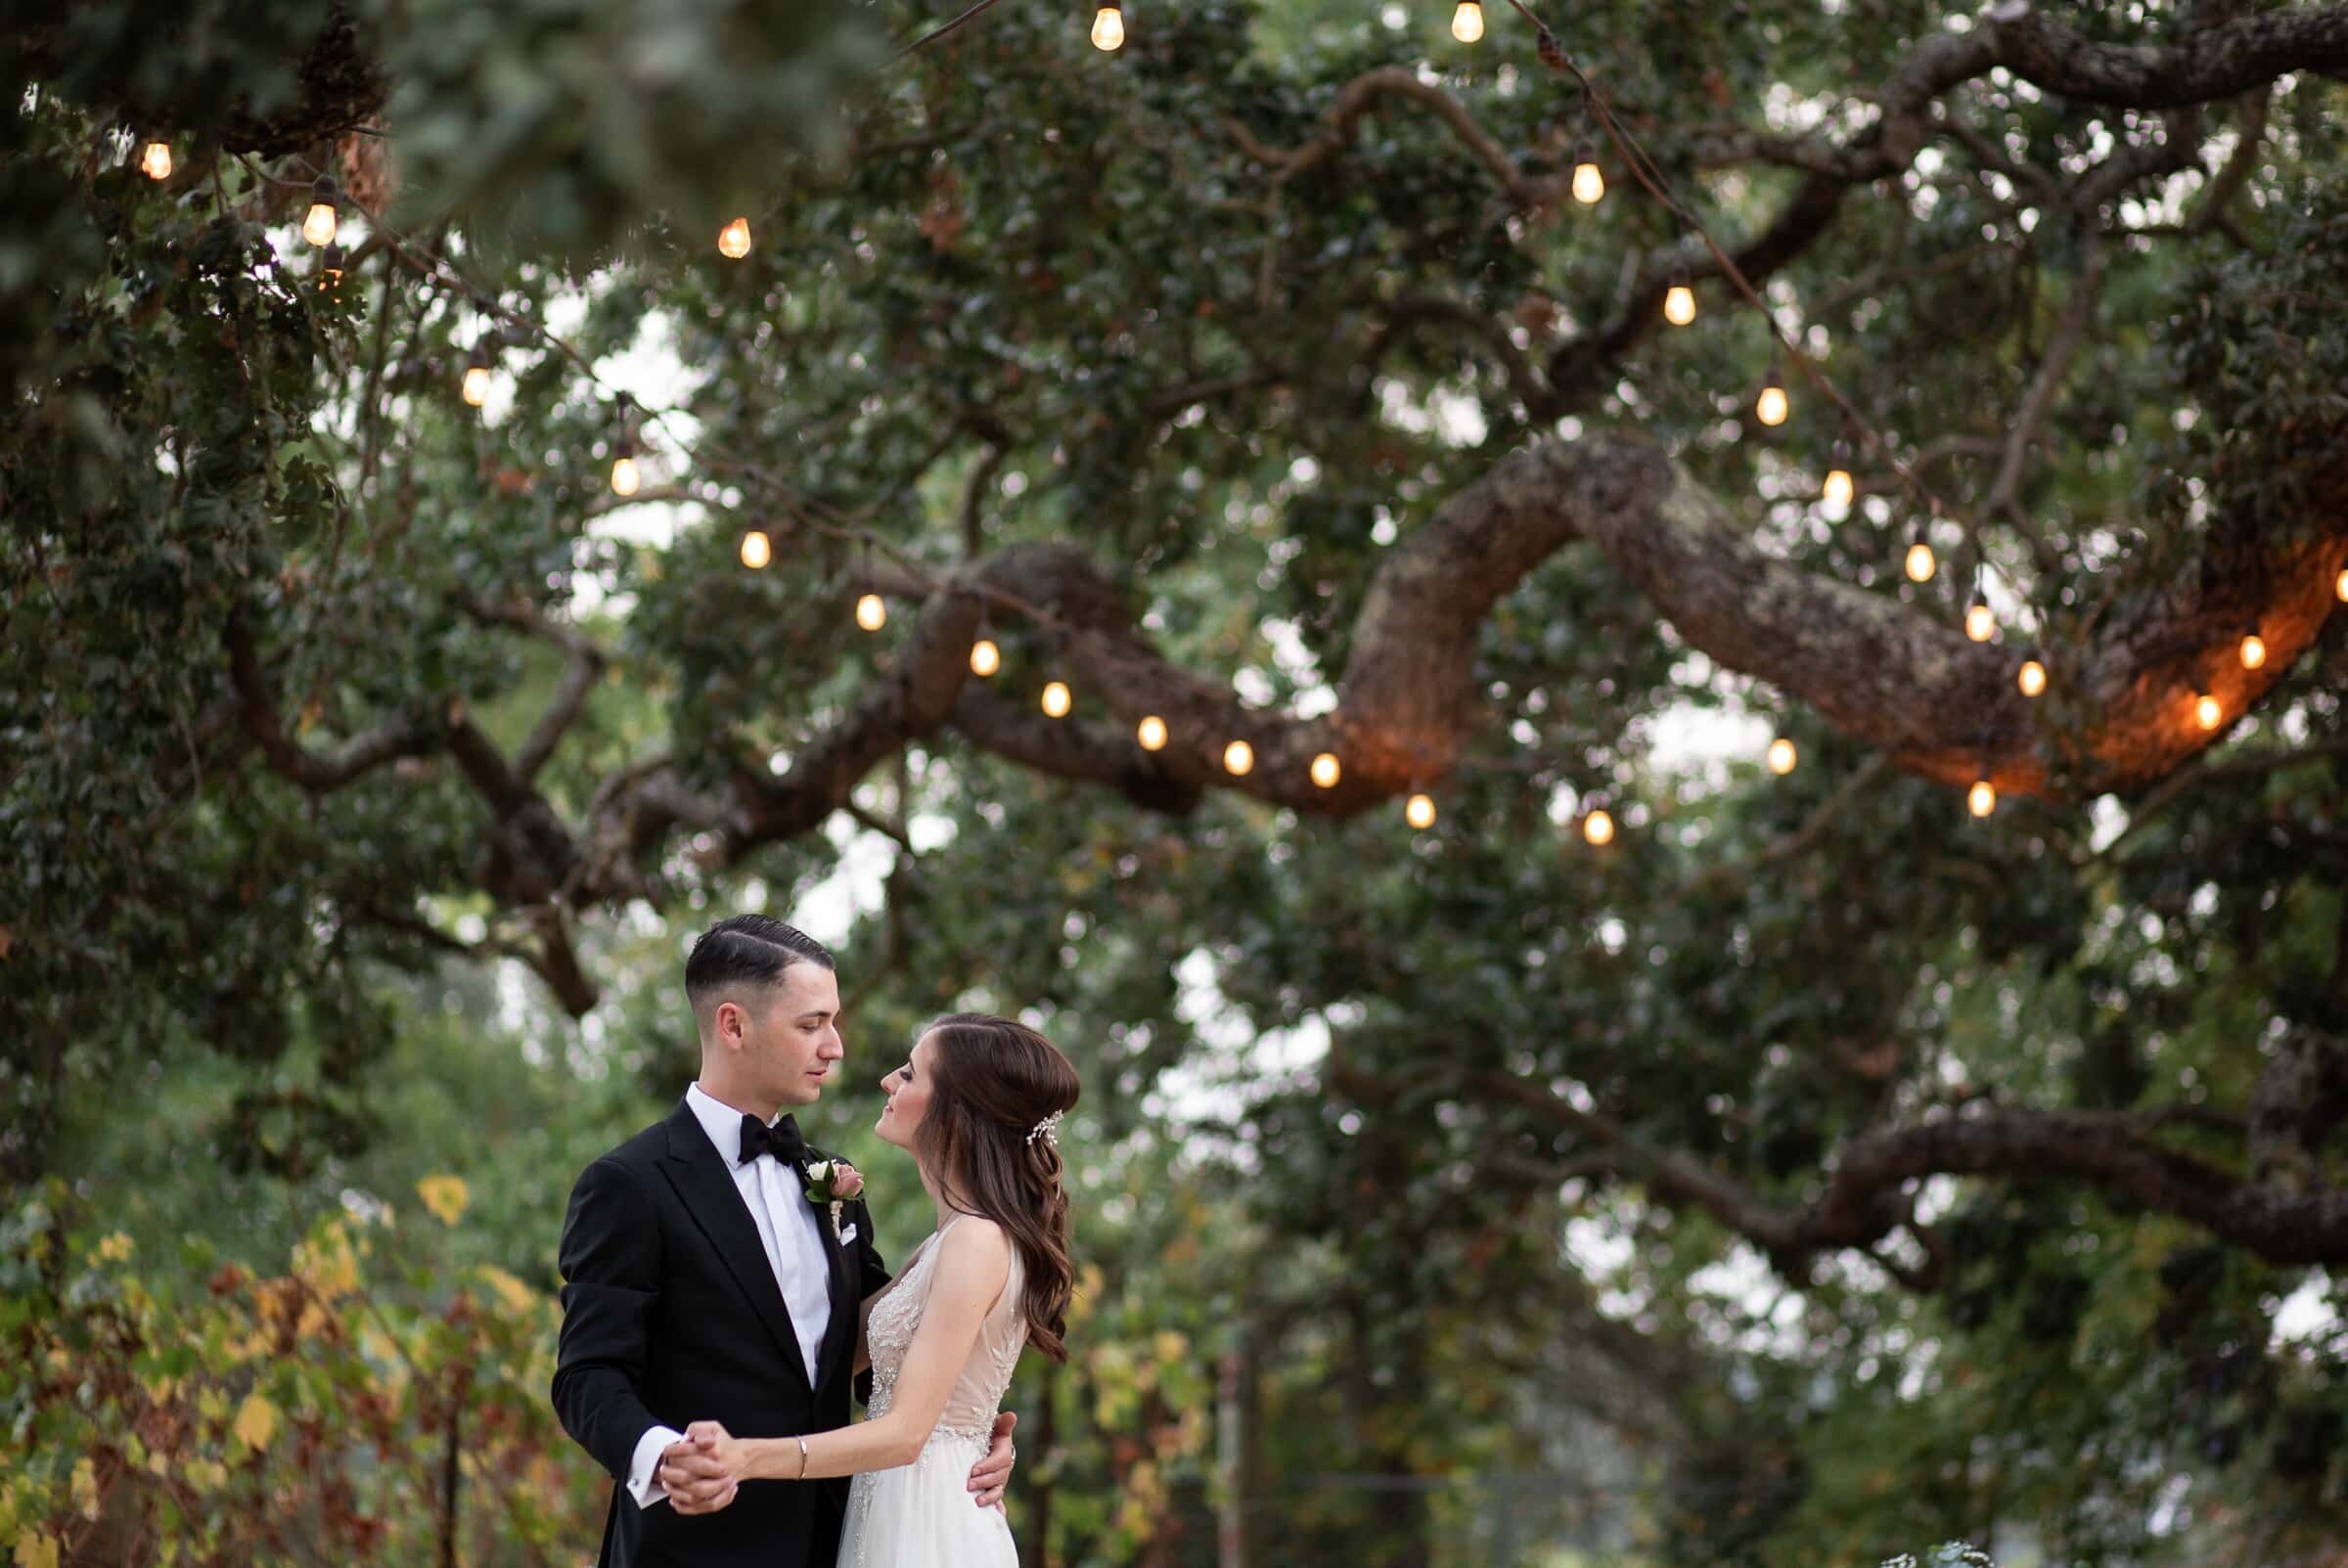 First dance under an oak tree. Elopement wedding photographer in North Carolina.